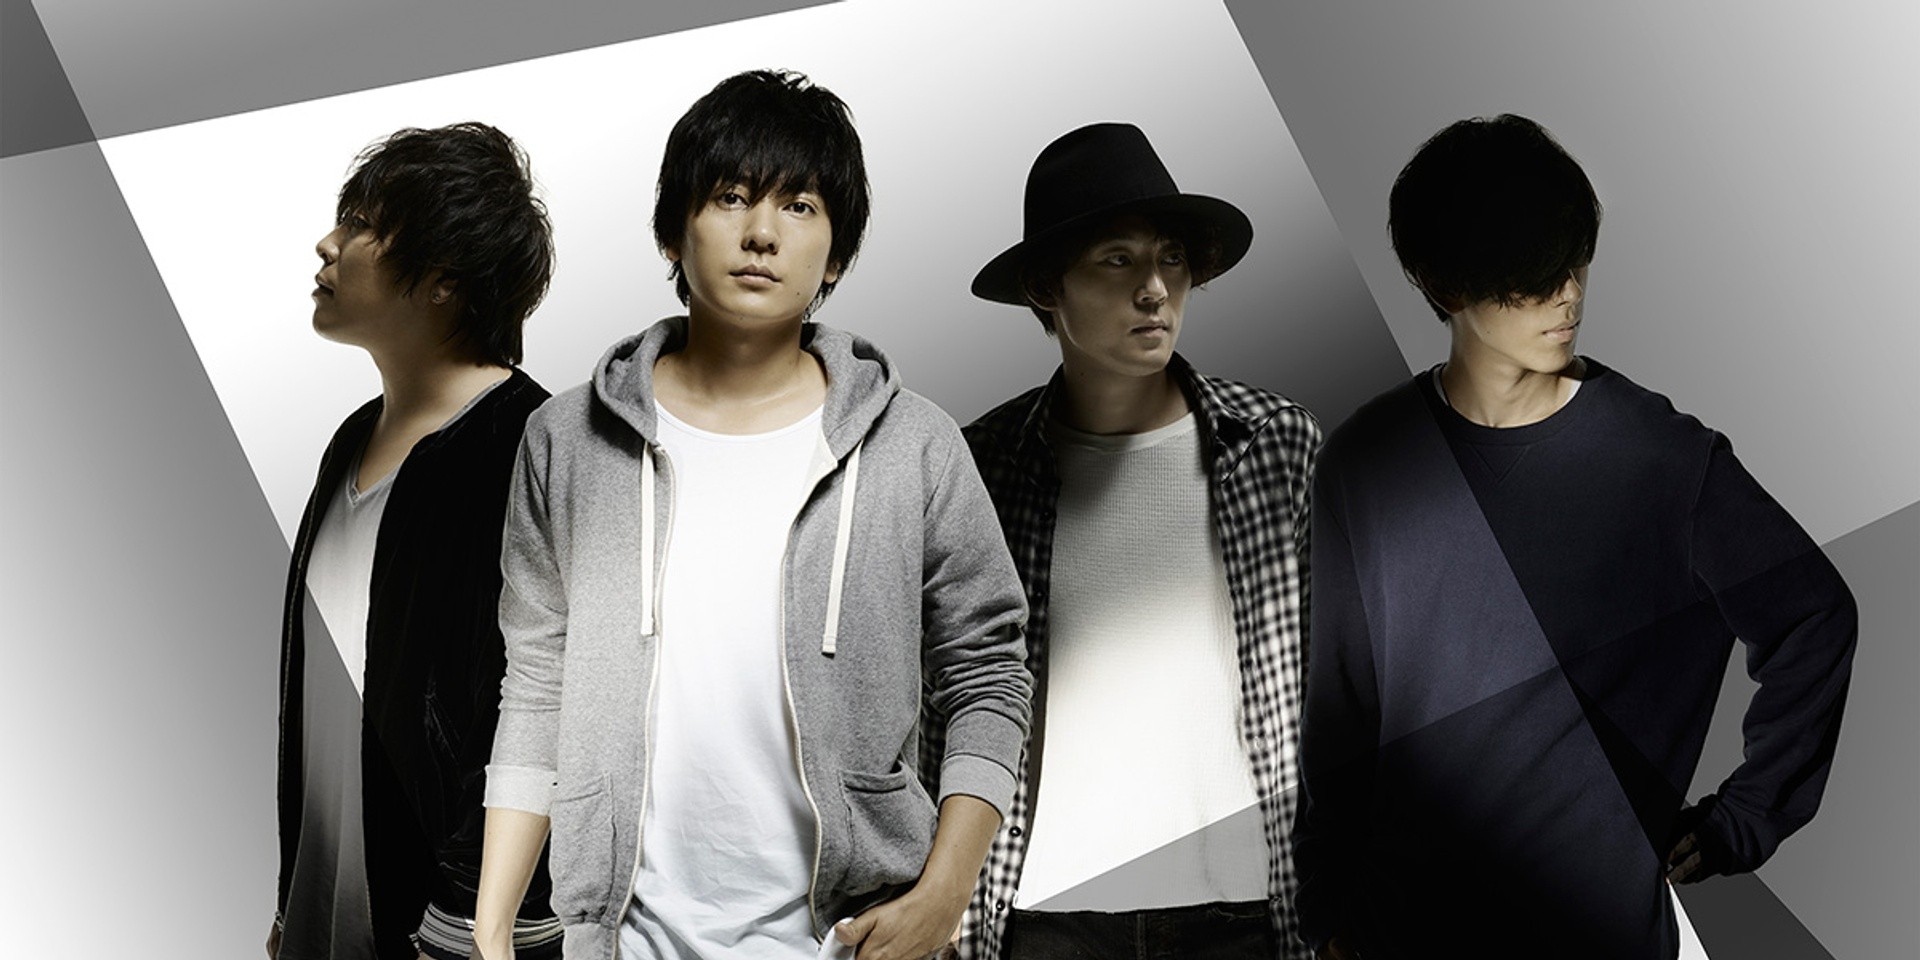 J-rock band Flumpool will return to Singapore